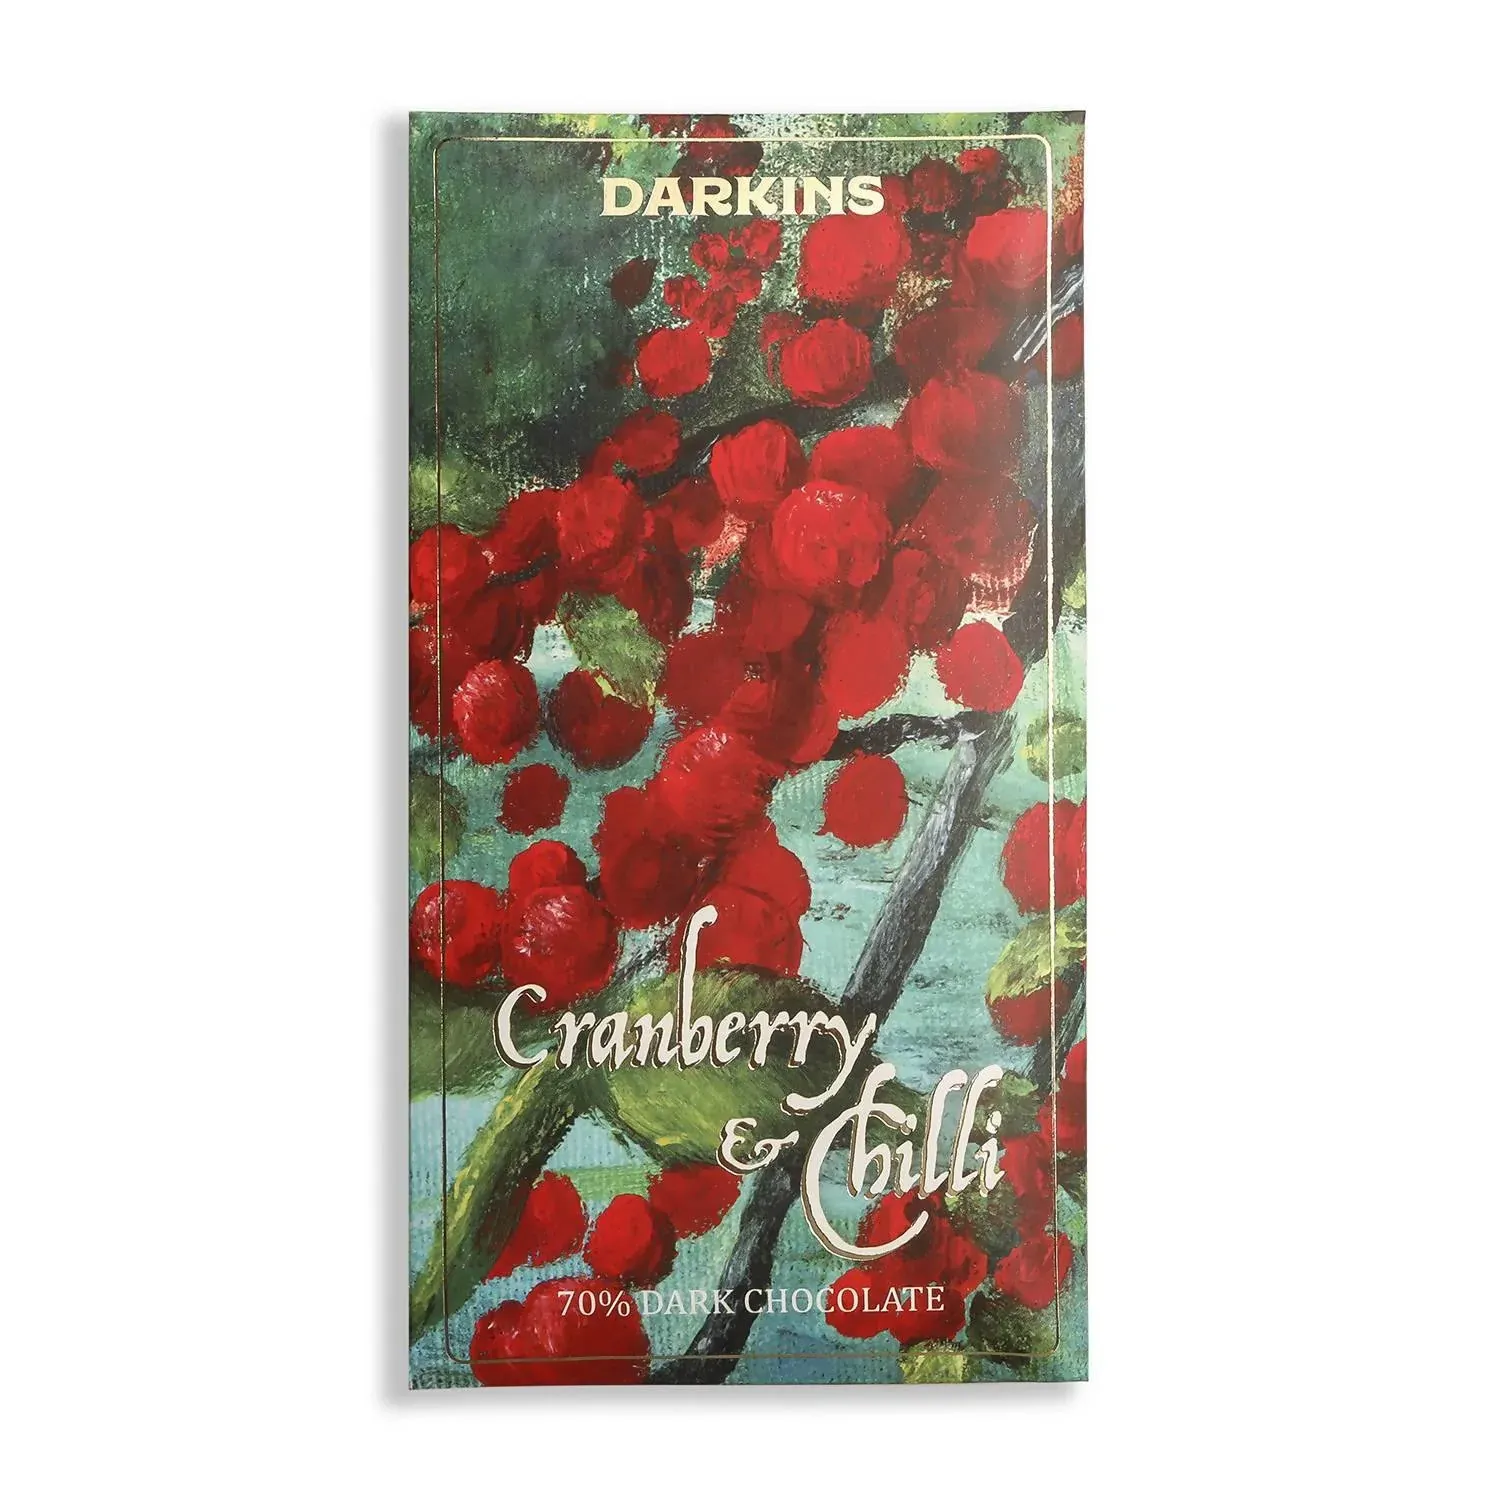 Darkins Dark Chocolate with Cranberry & Chilli  Image